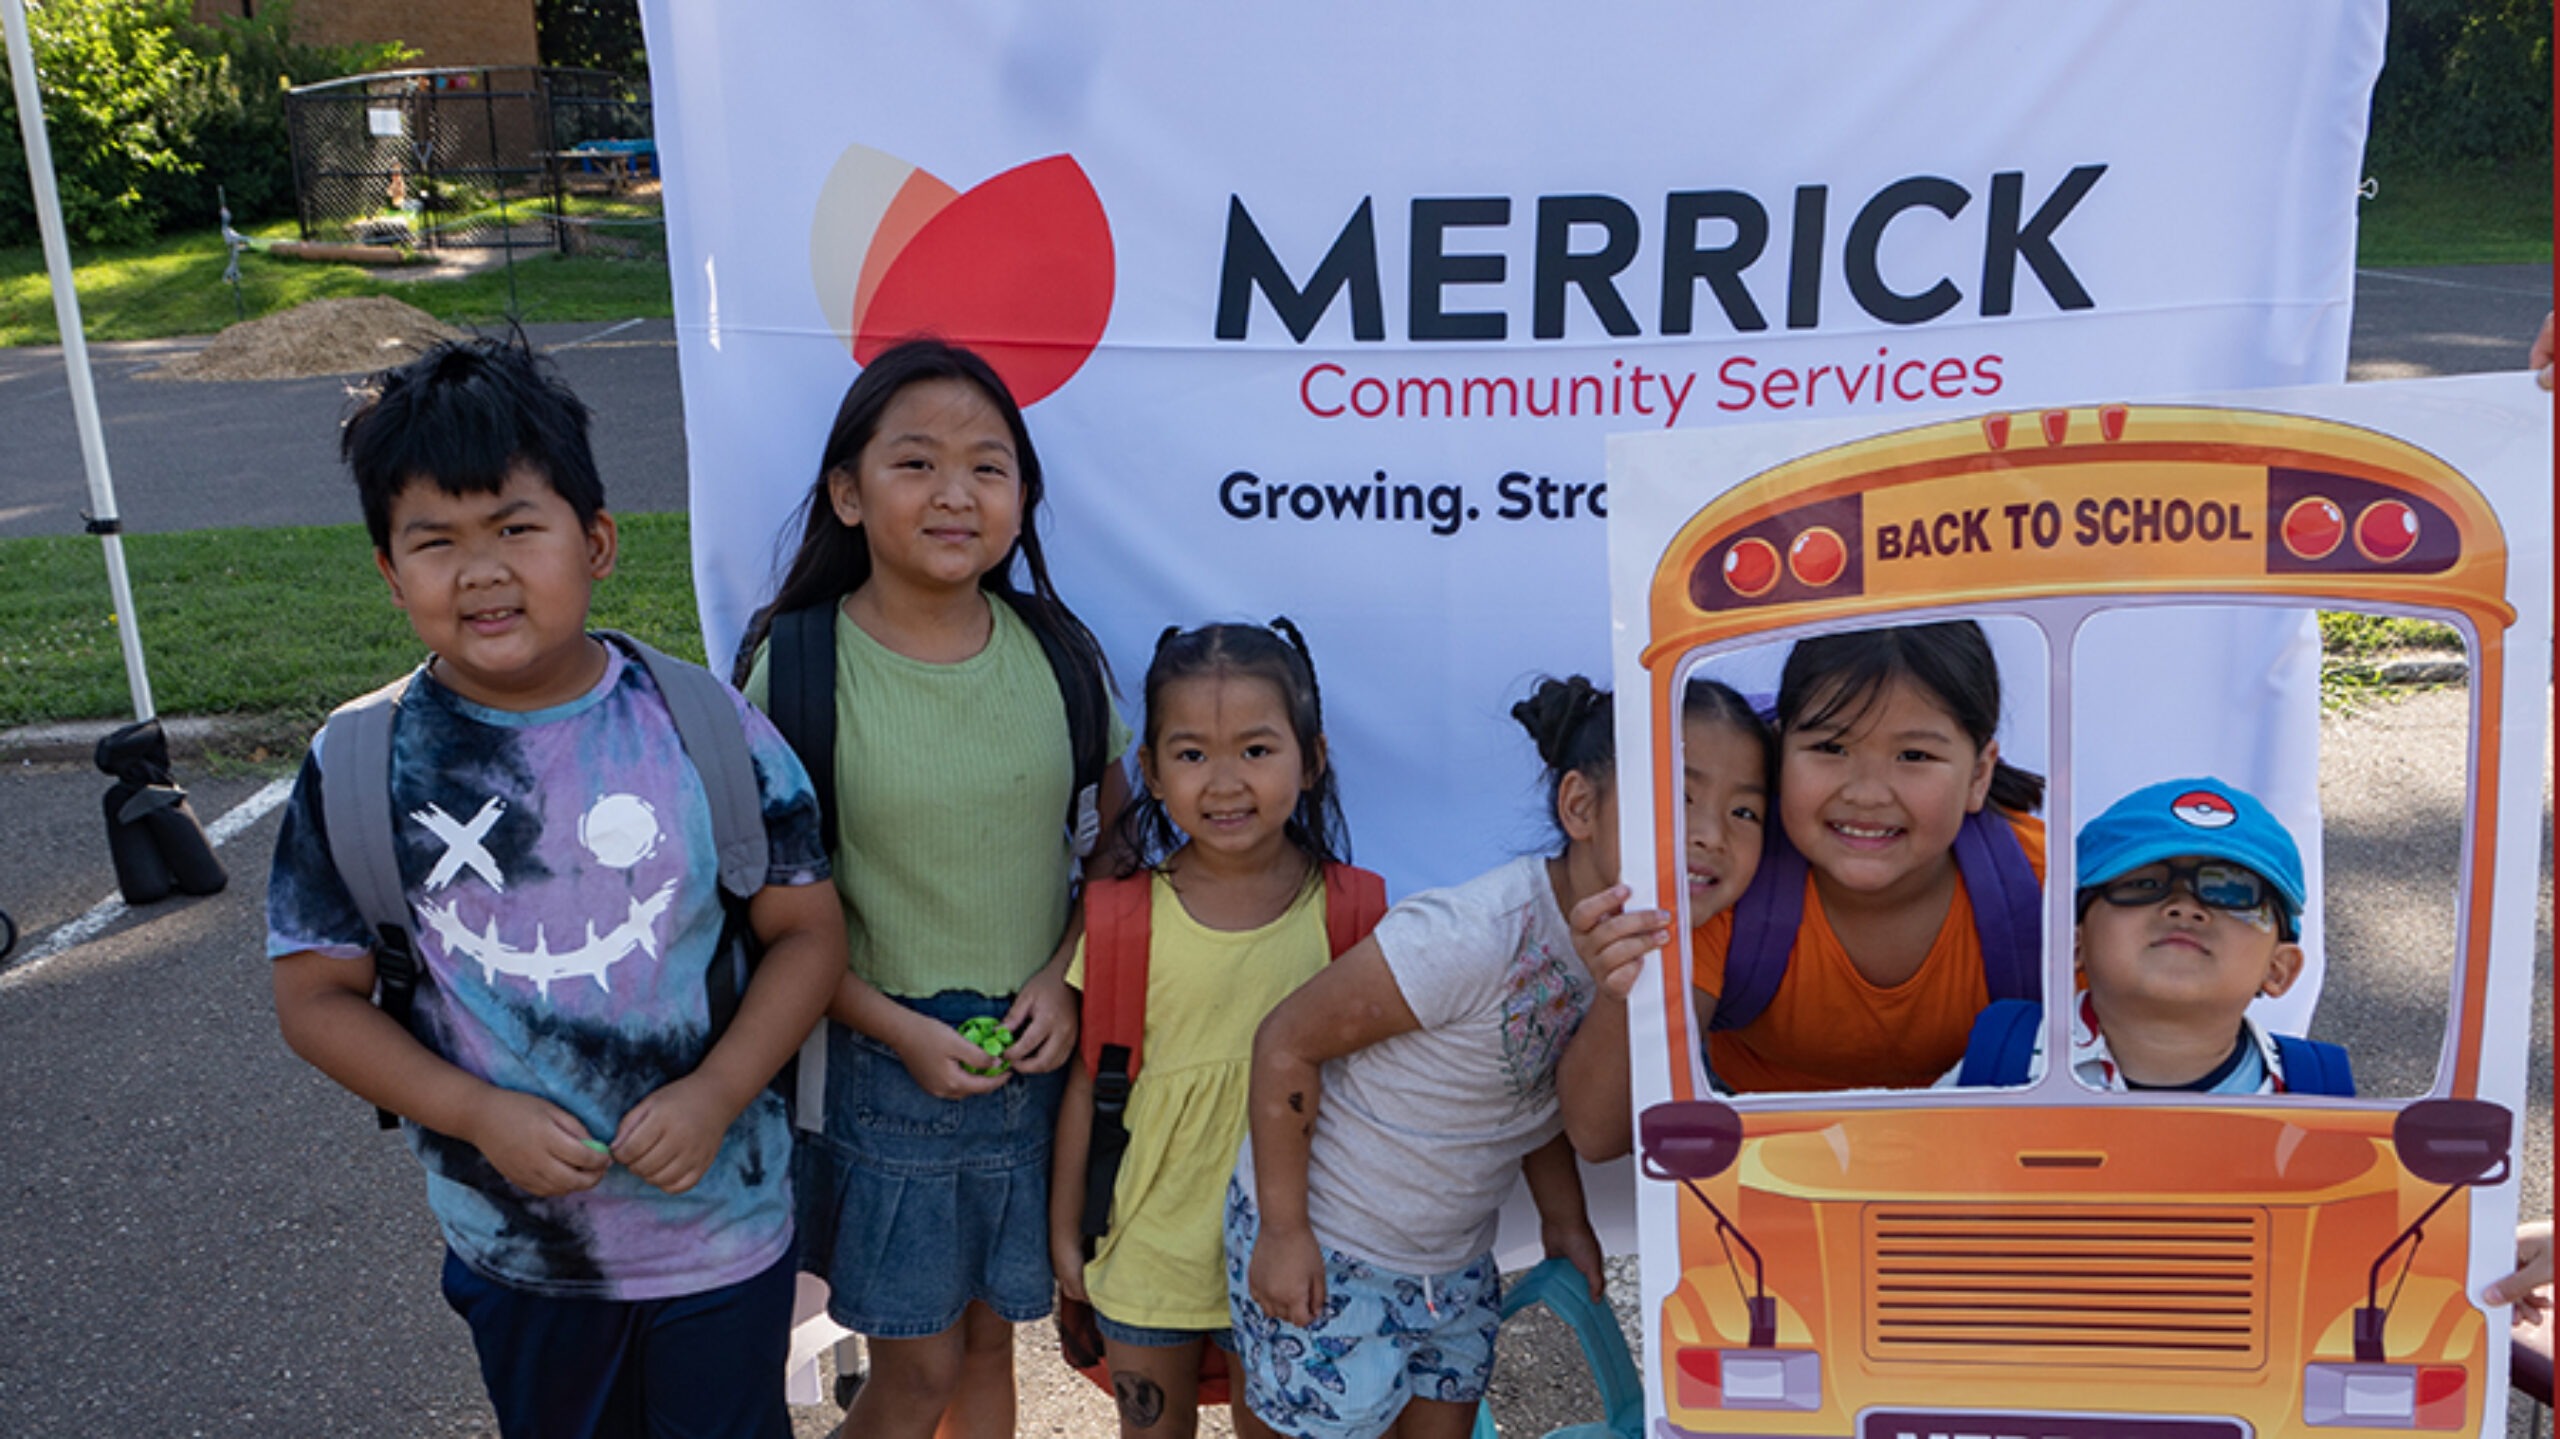 Six children posing with a school bus cutout